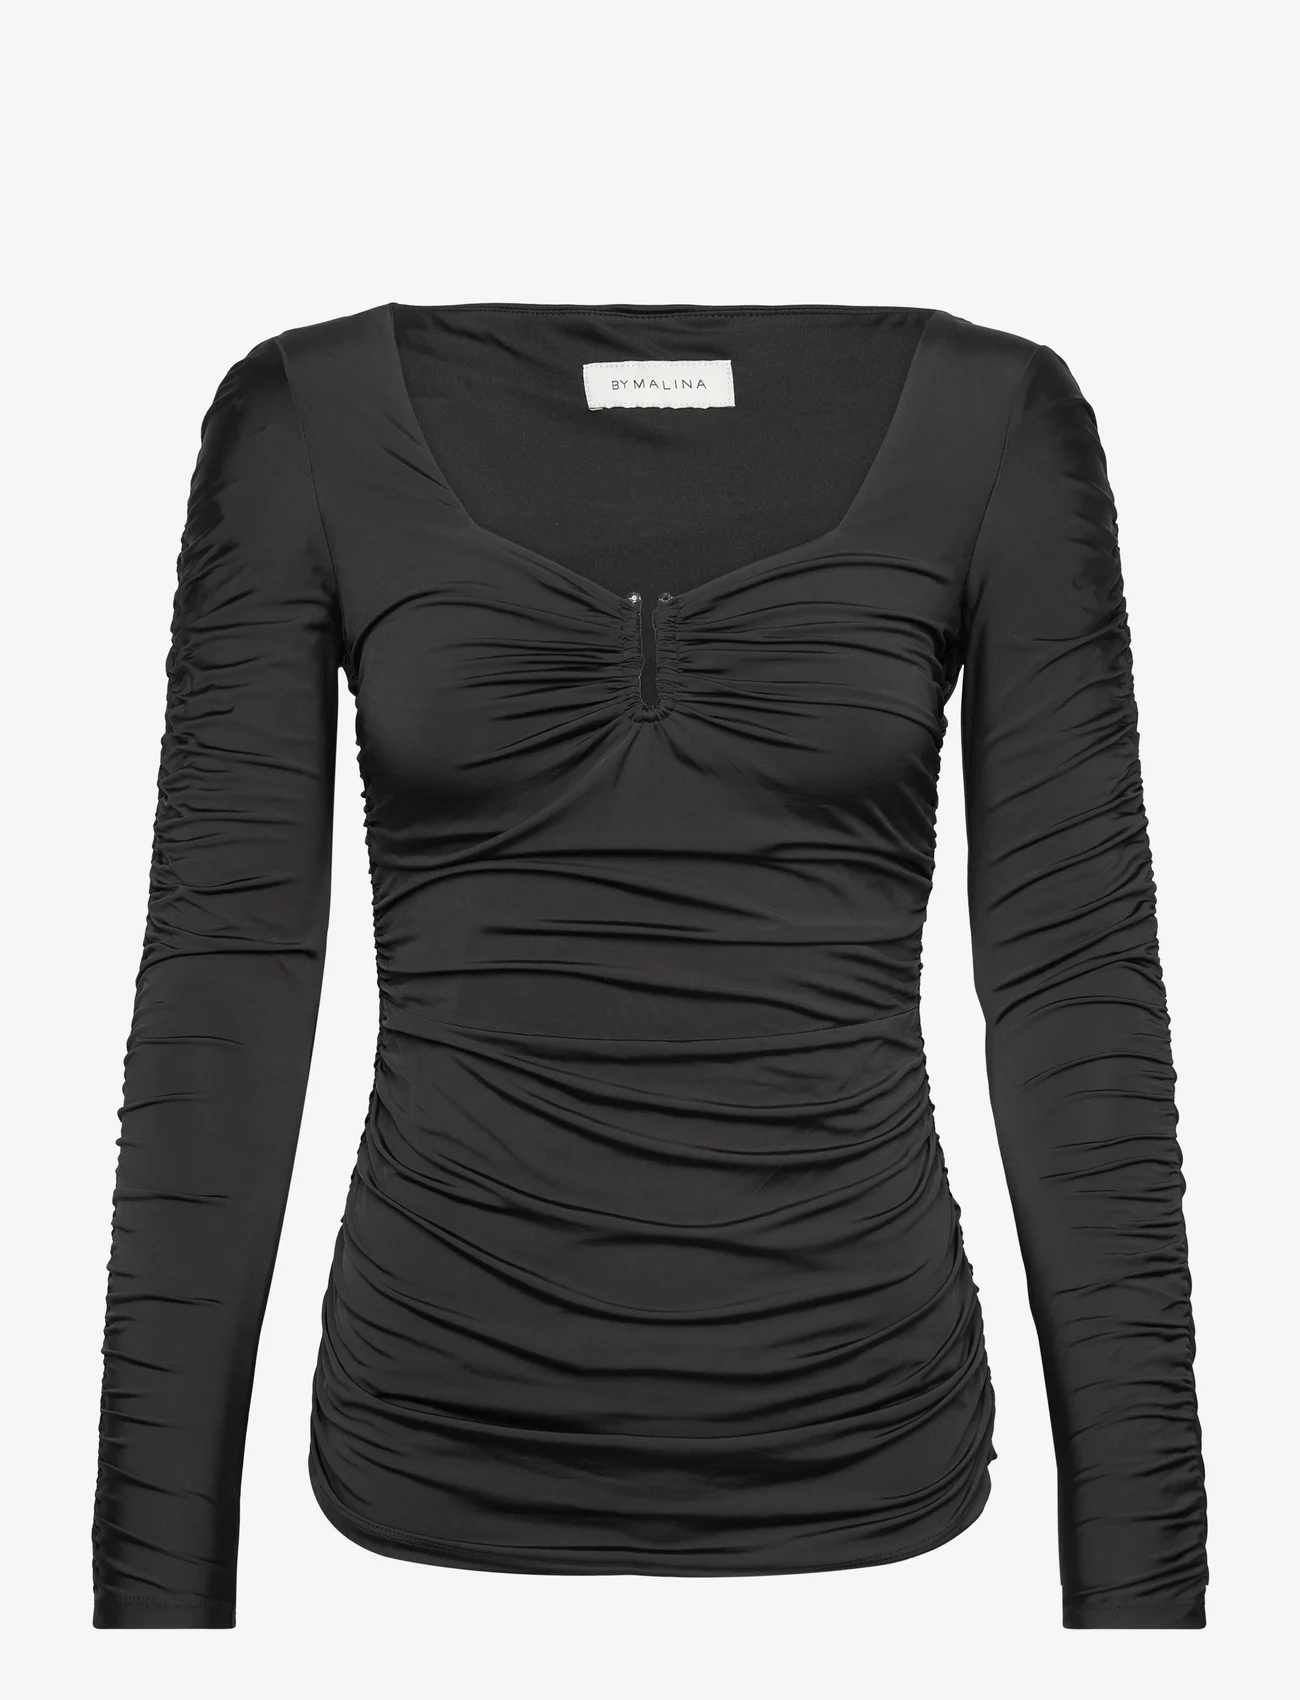 Malina - Elle heart shaped jersey top - langærmede toppe - black - 0